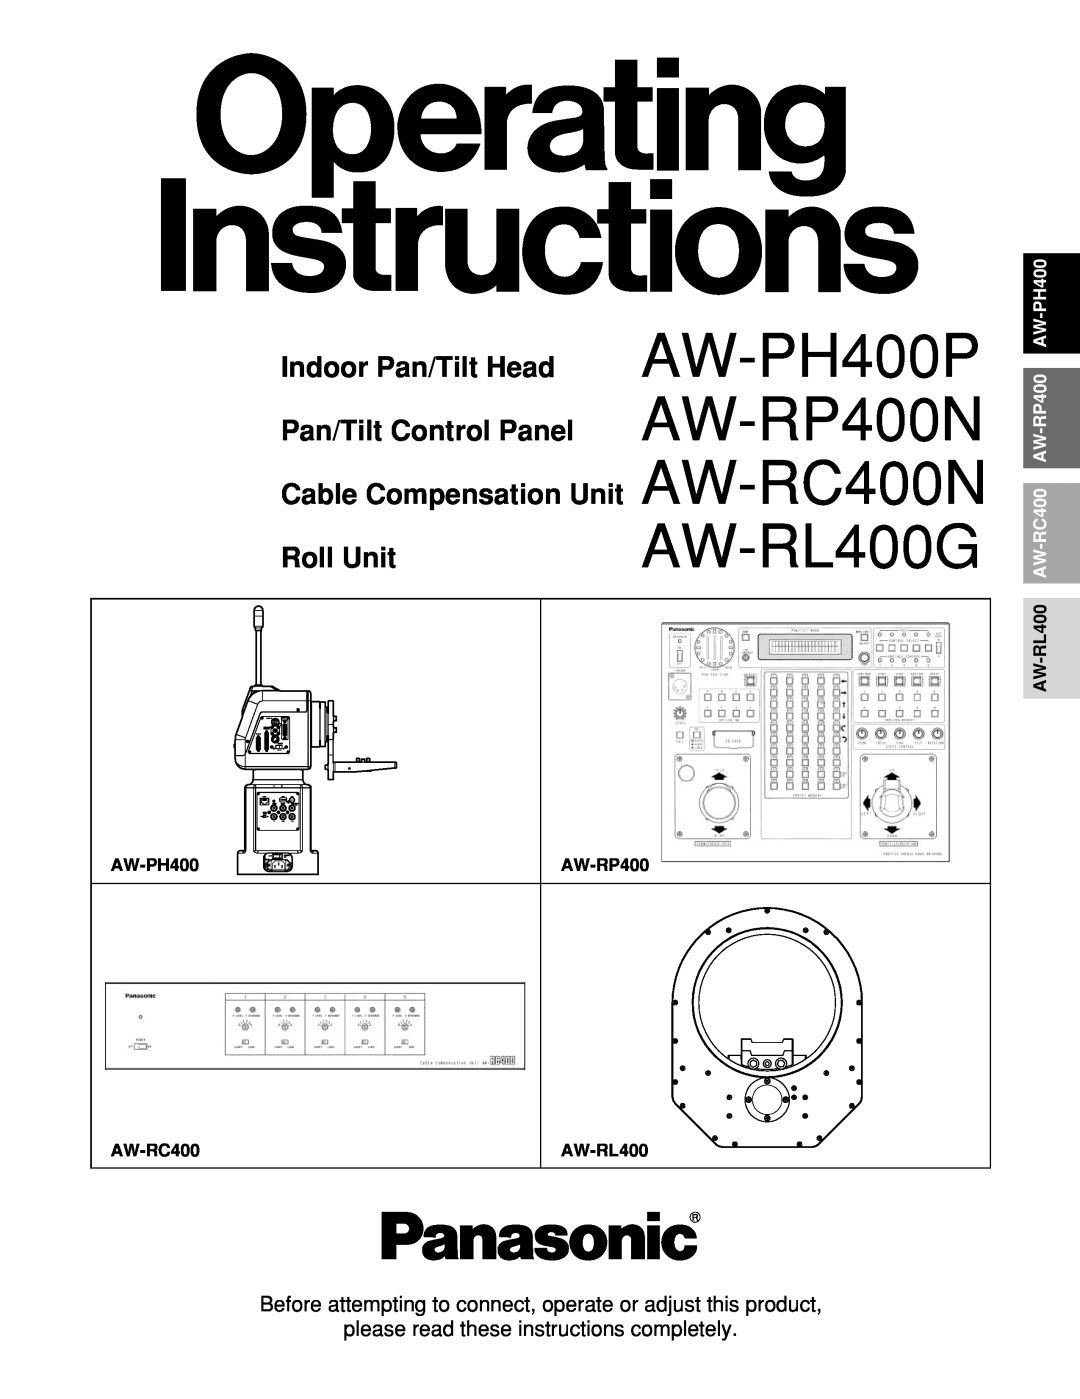 Panasonic manual AW-RC400, AW-PH400P, AW-RP400N, AW-RL400G, Indoor Pan/Tilt Head, Pan/Tilt Control Panel 